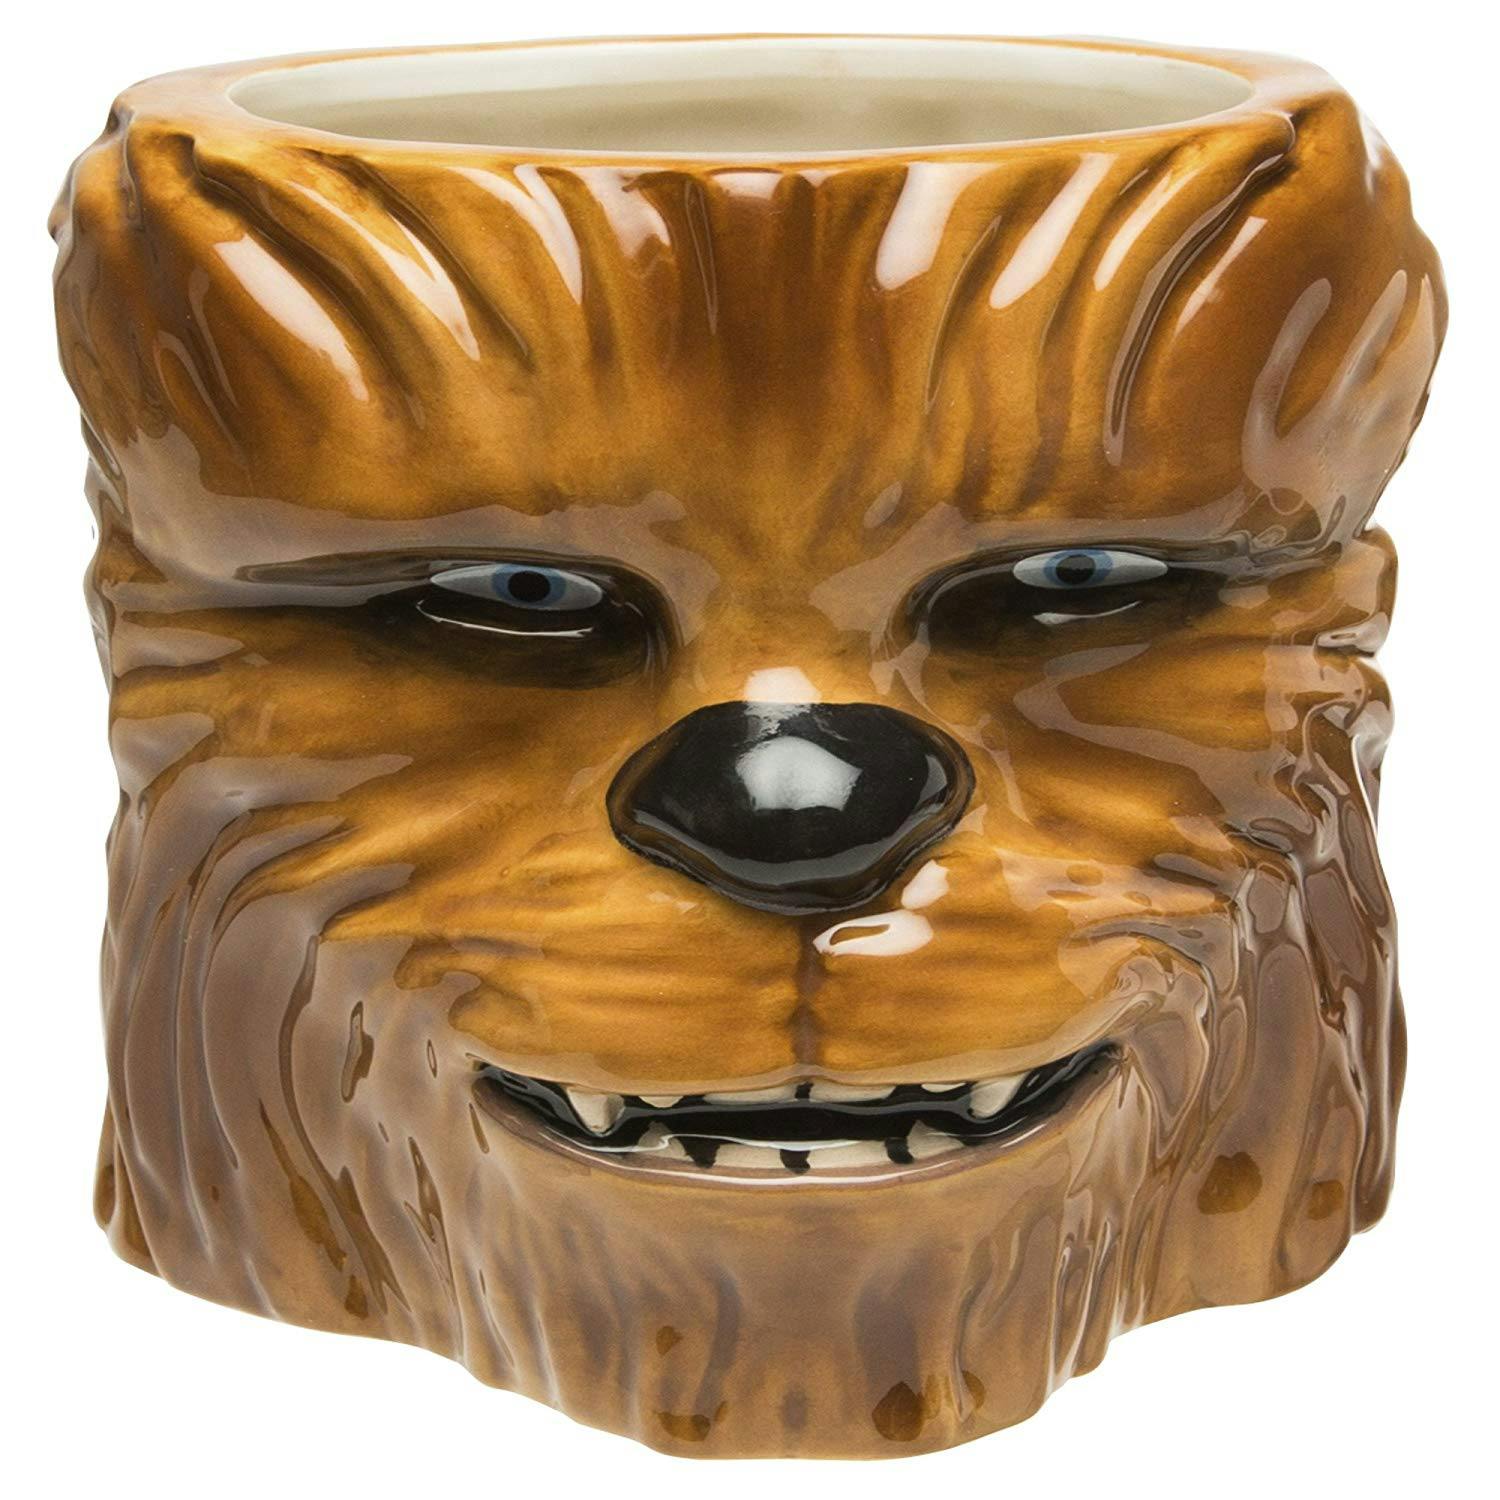 Chewie mug